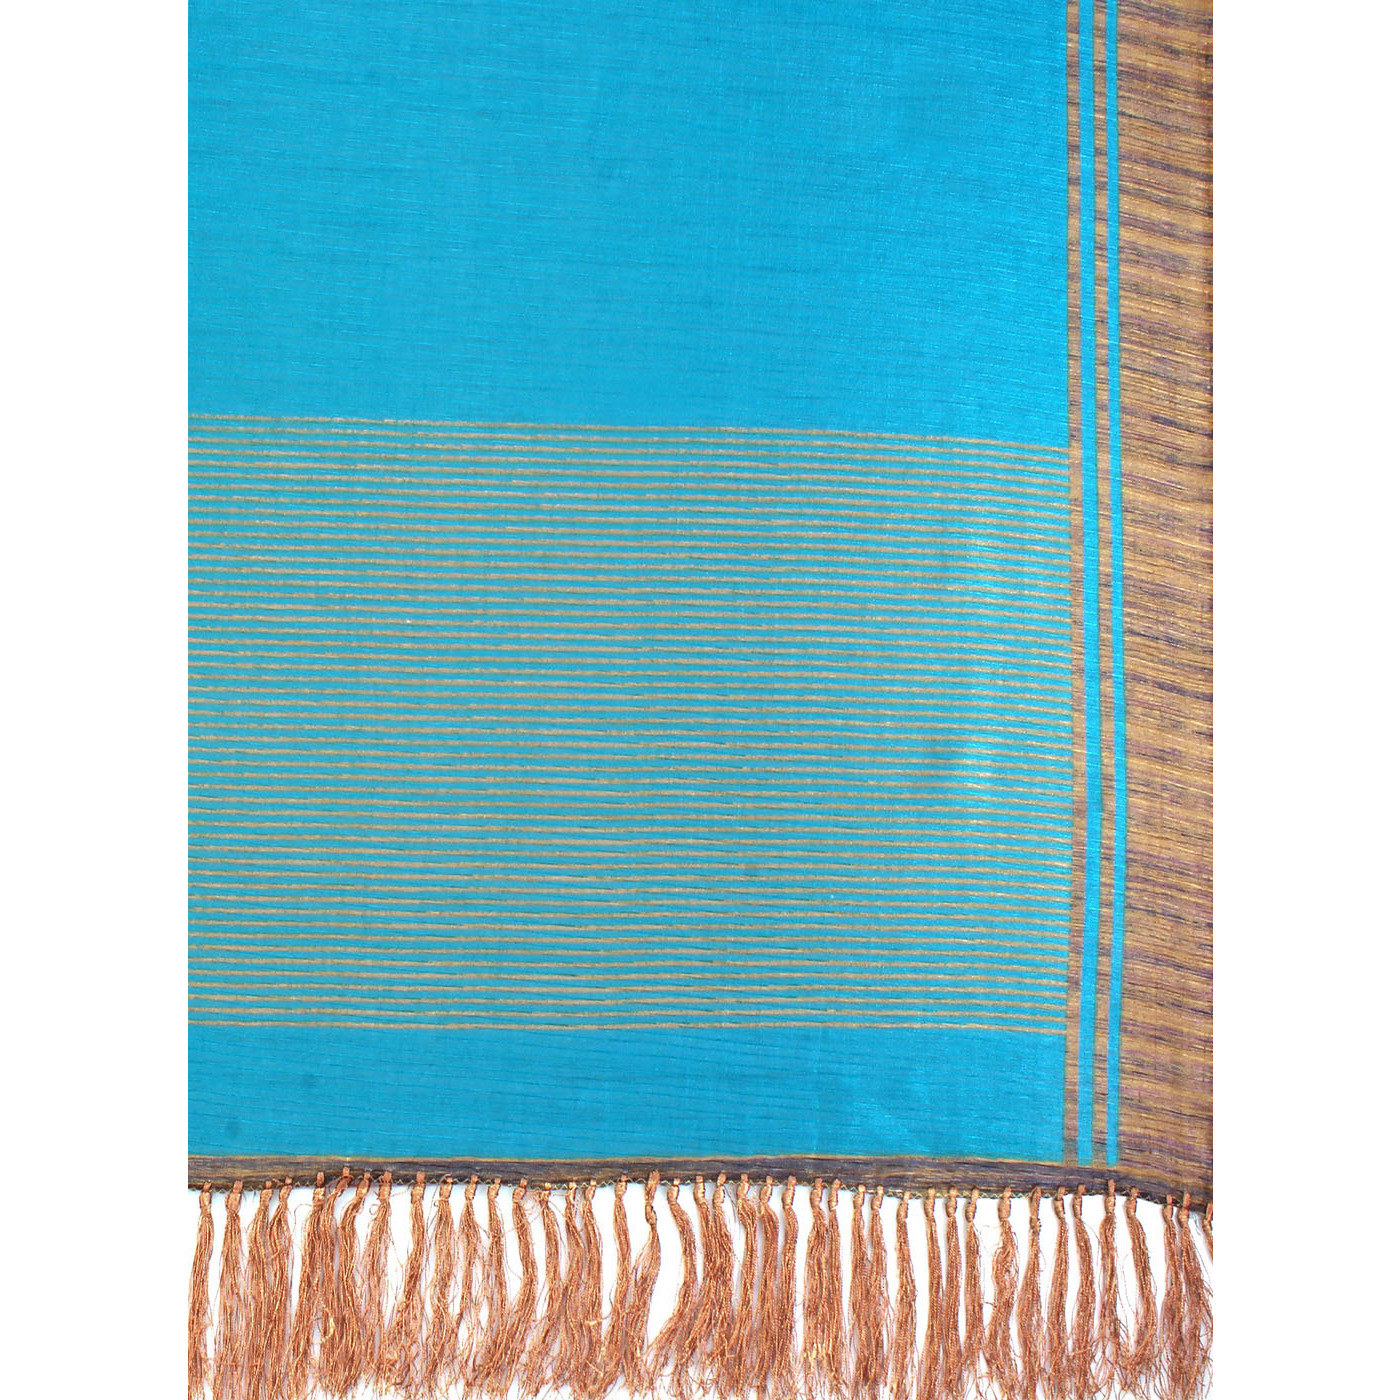 Rajnandini Teal Blue Tussar Silk Plain Traditional Saree